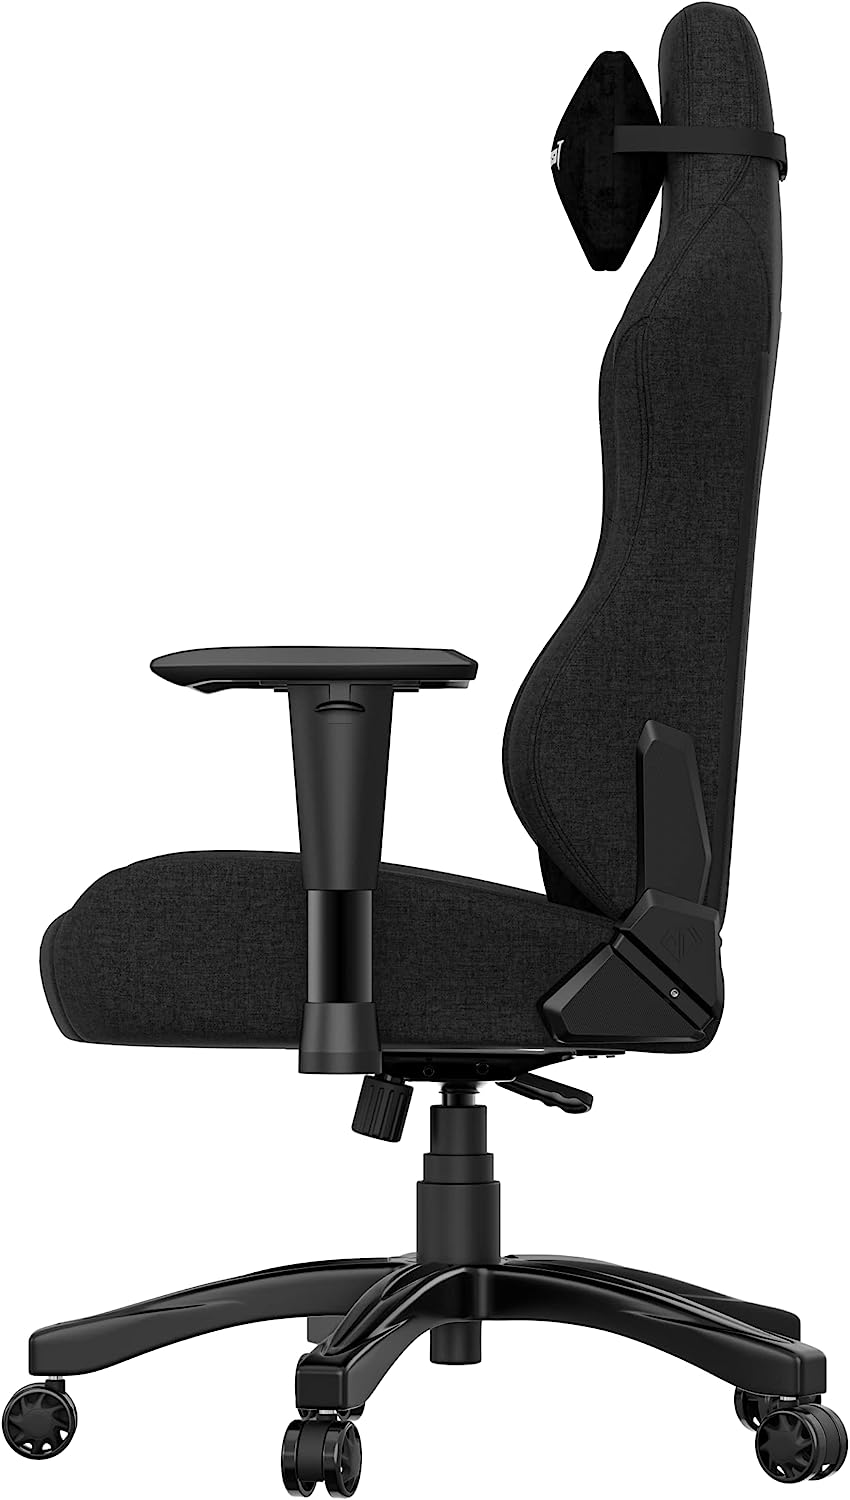 Anda Seat Phantom 3 Series Premium Gaming Chair With Neck Pillow And Lumbar Back Suppor Fabric, Black, Large